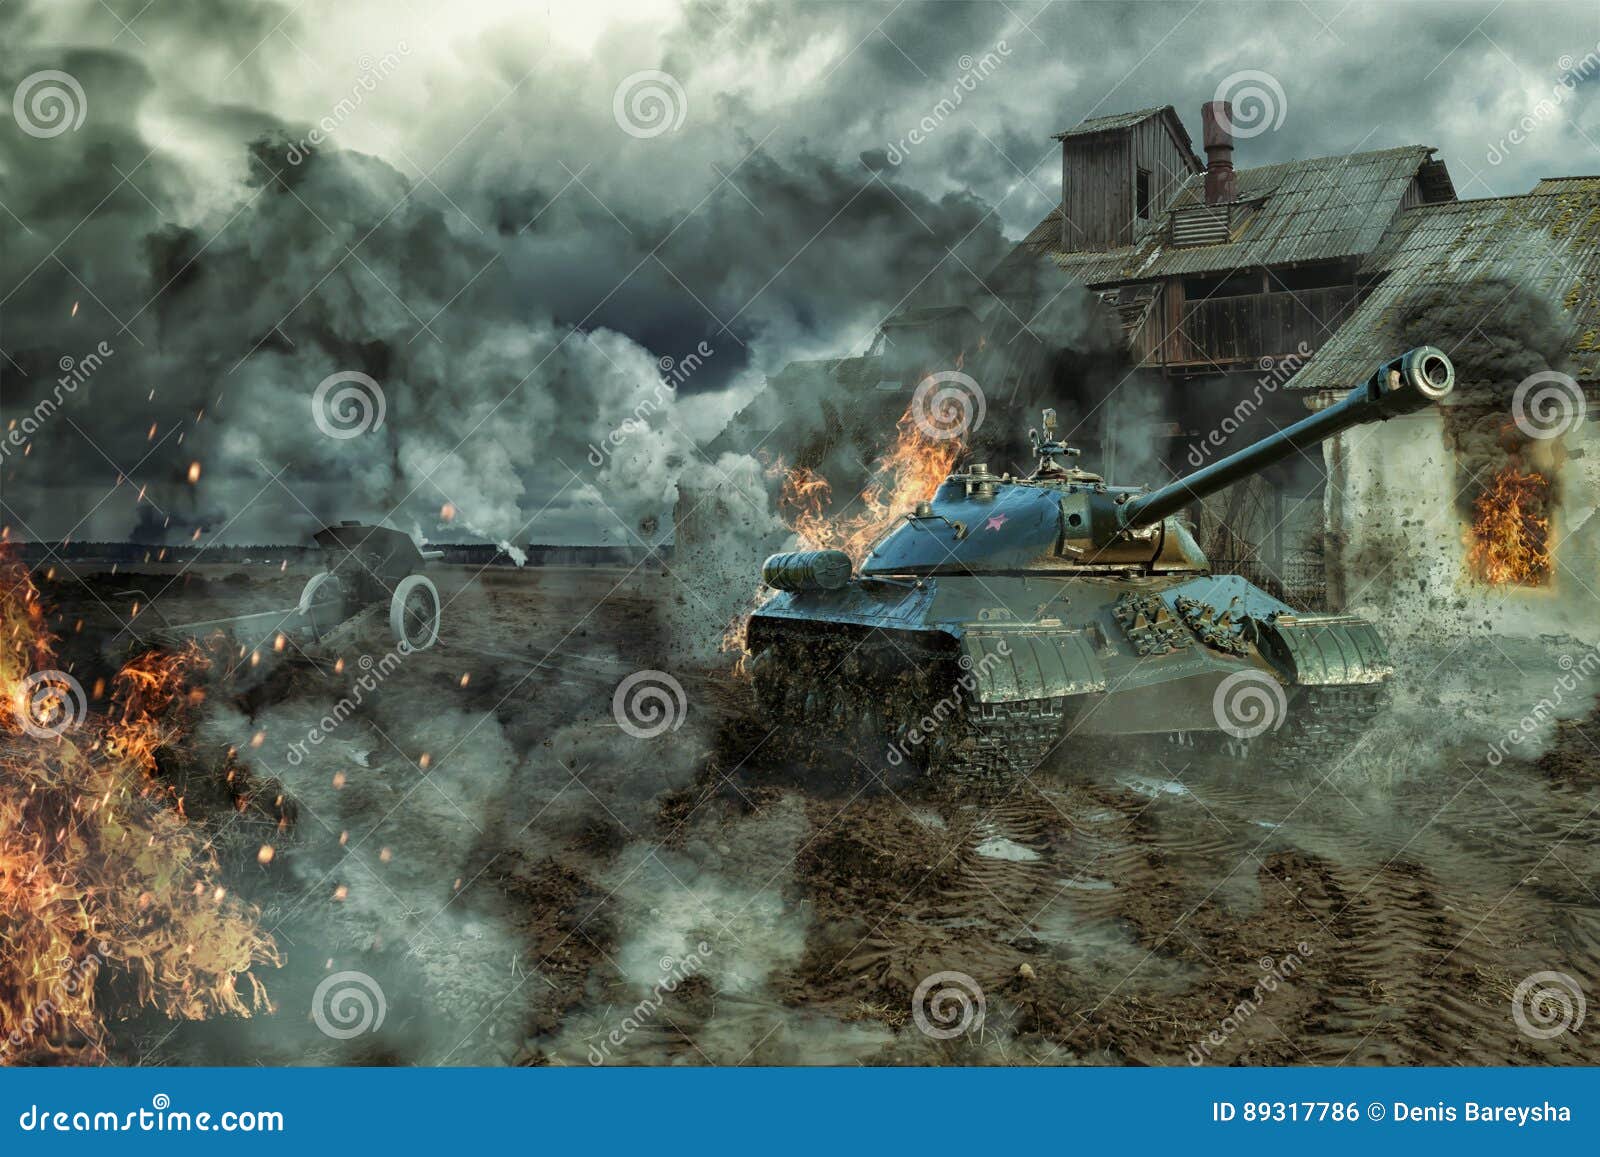 Battle Of Tanks Download